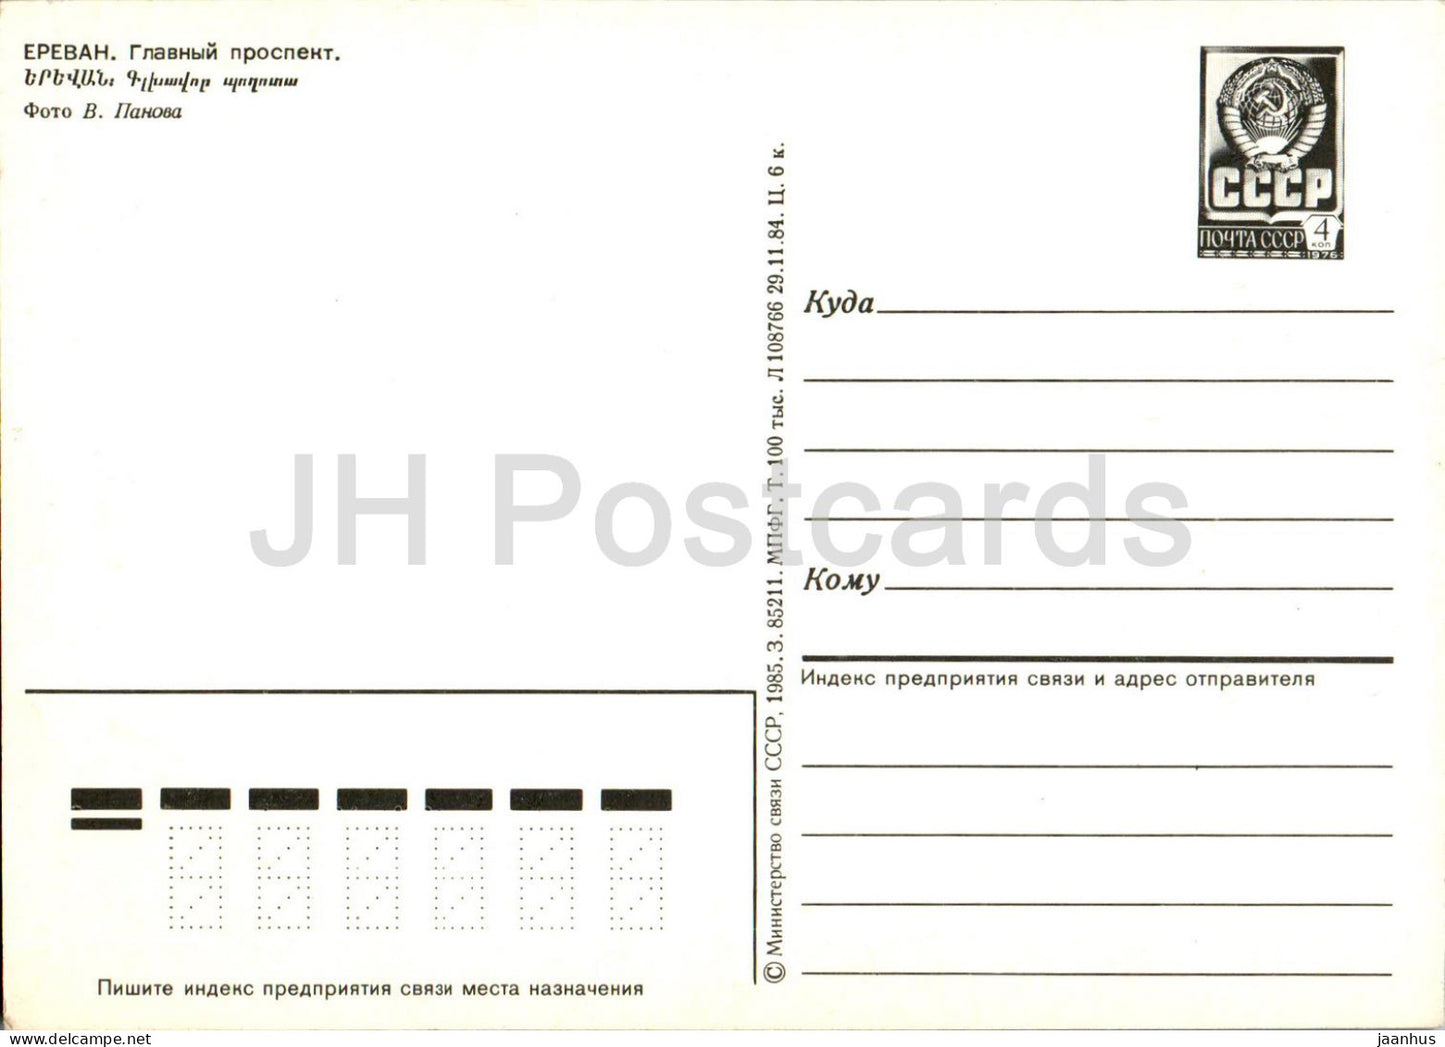 Erevan - Perspective principale - entier postal - 1985 - Arménie URSS - inutilisé 